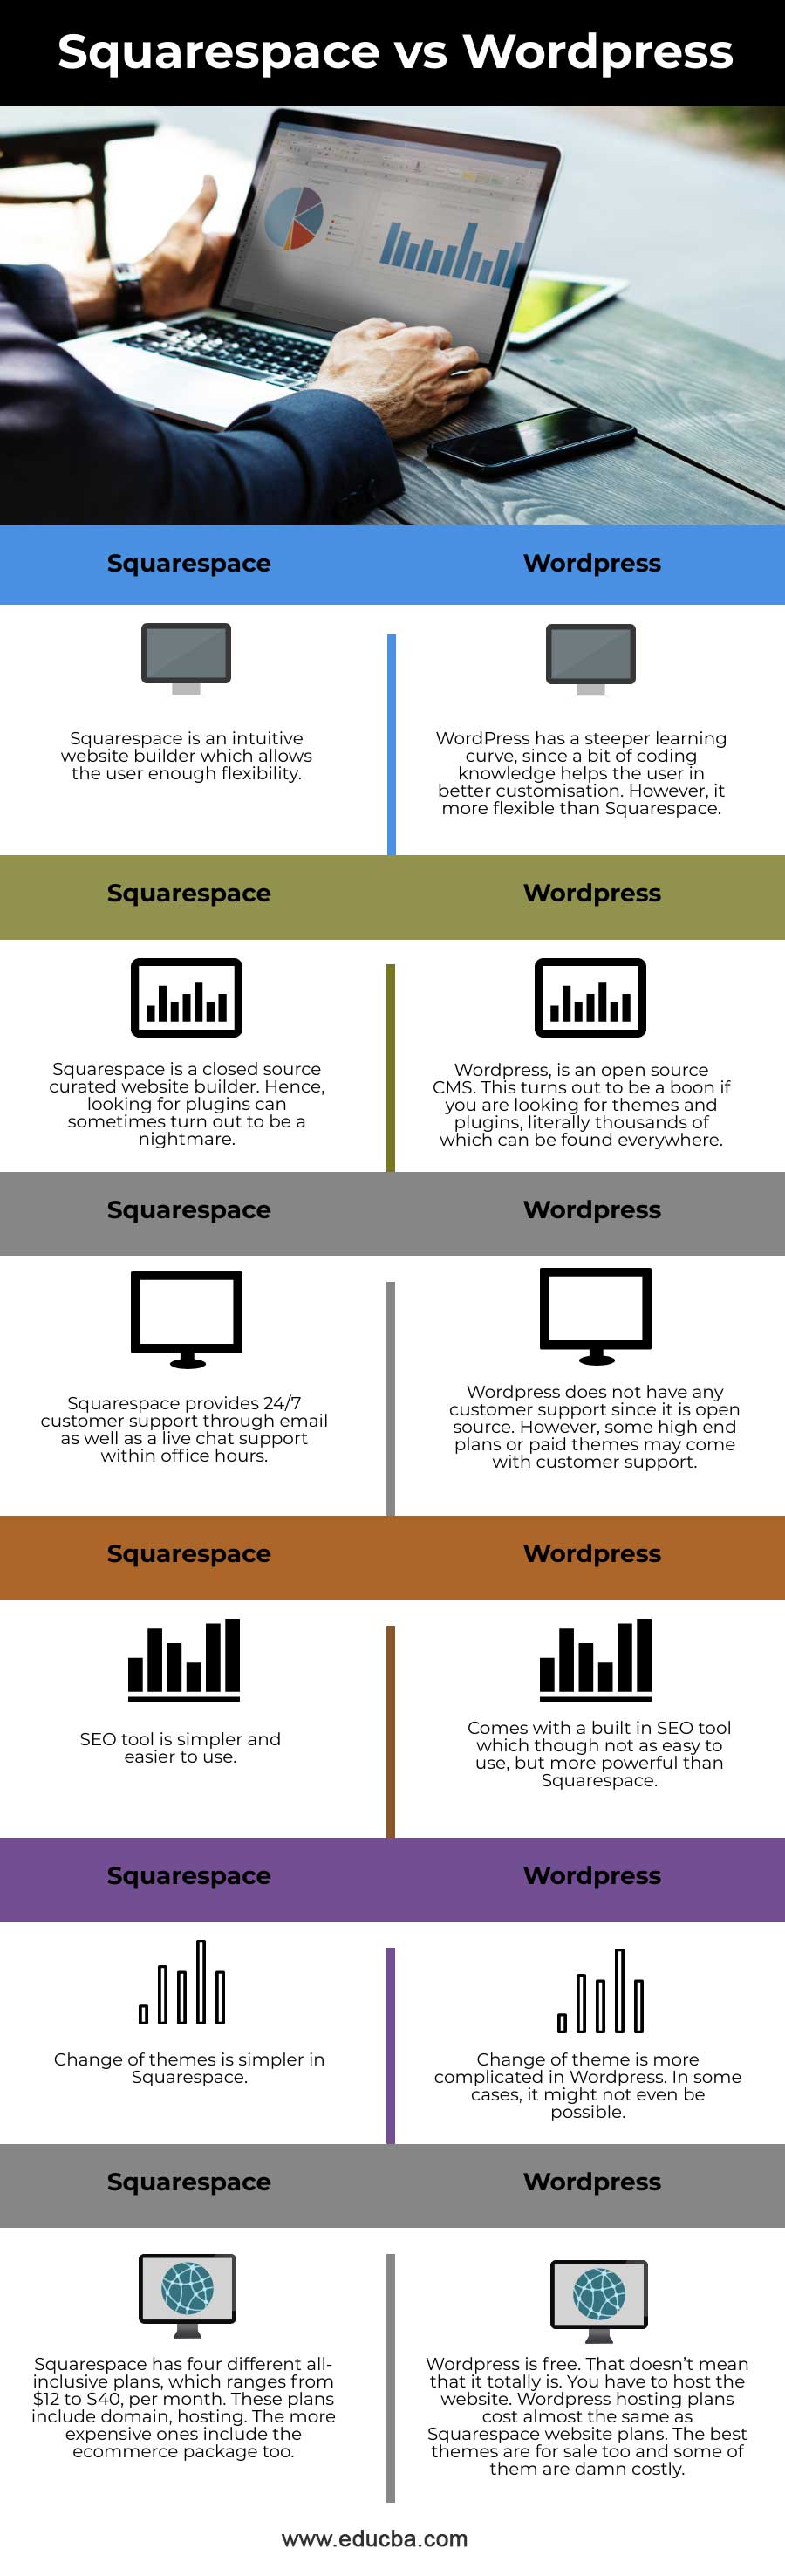 Squarespace-vs-Wordpress-info